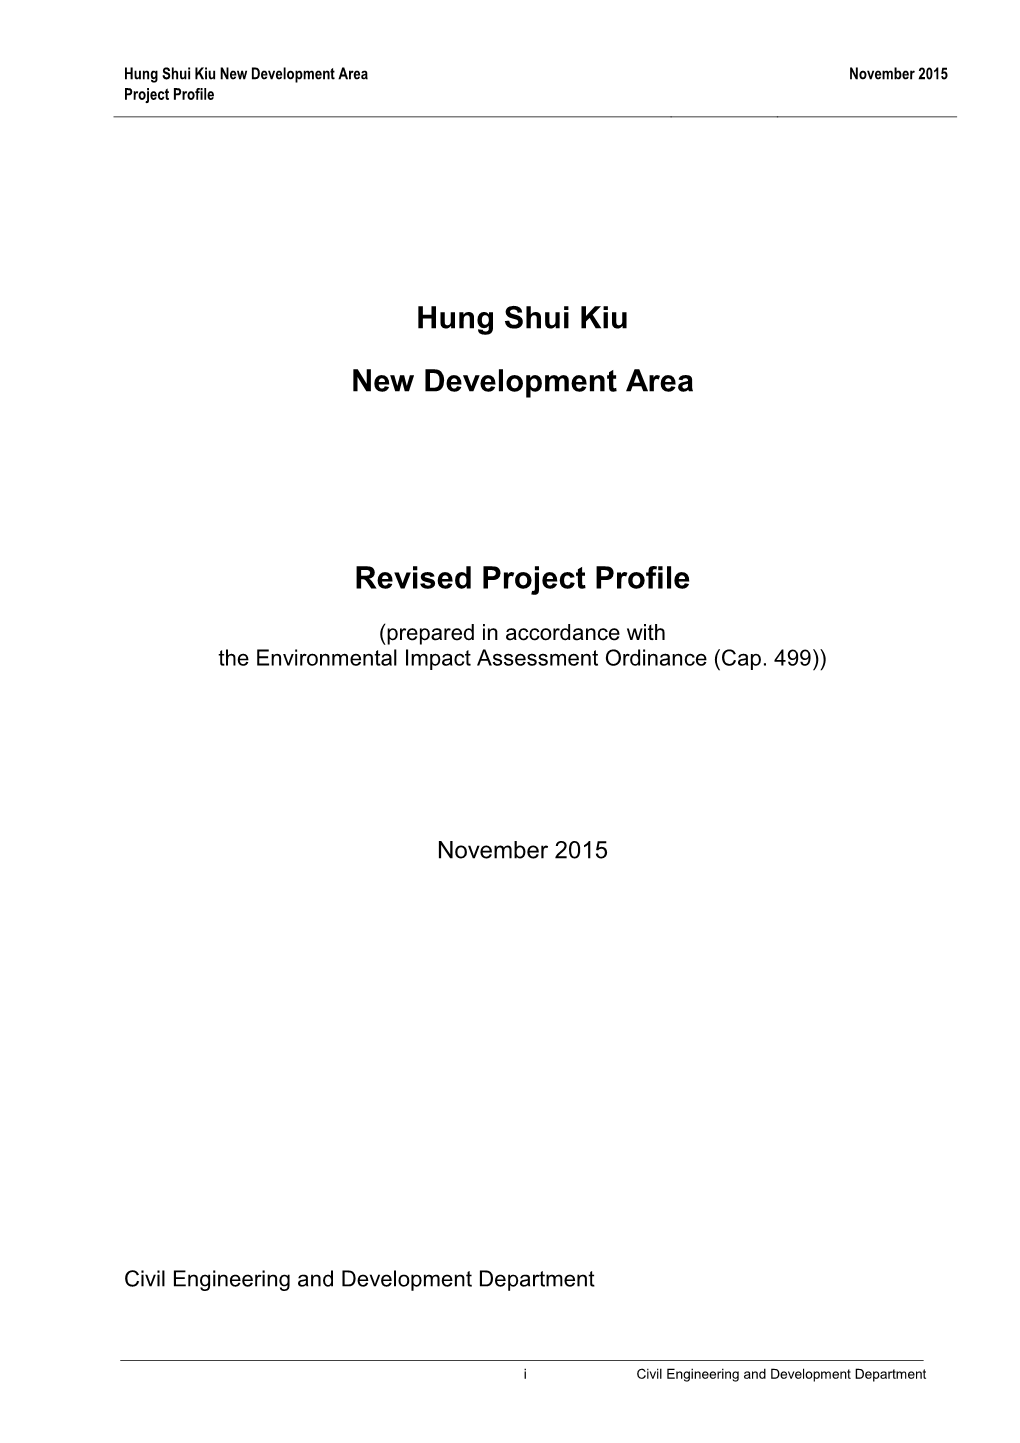 Hung Shui Kiu New Development Area Revised Project Profile